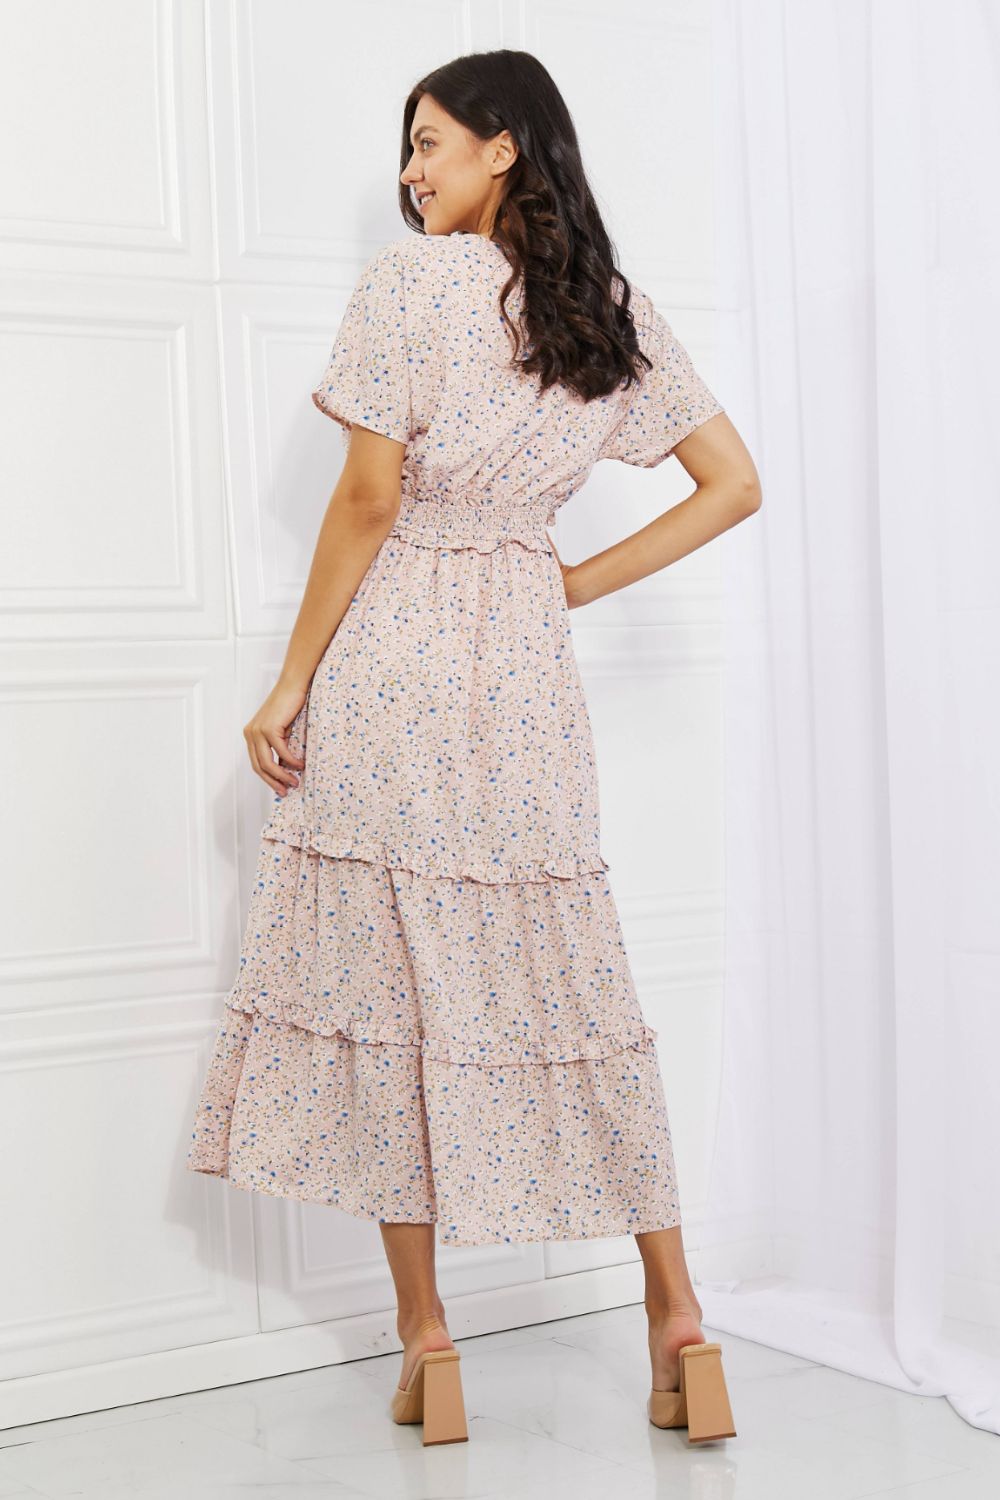 HEYSON Sweet Talk Kimono Sleeve Maxi Dress in Blush Pink - Online Only